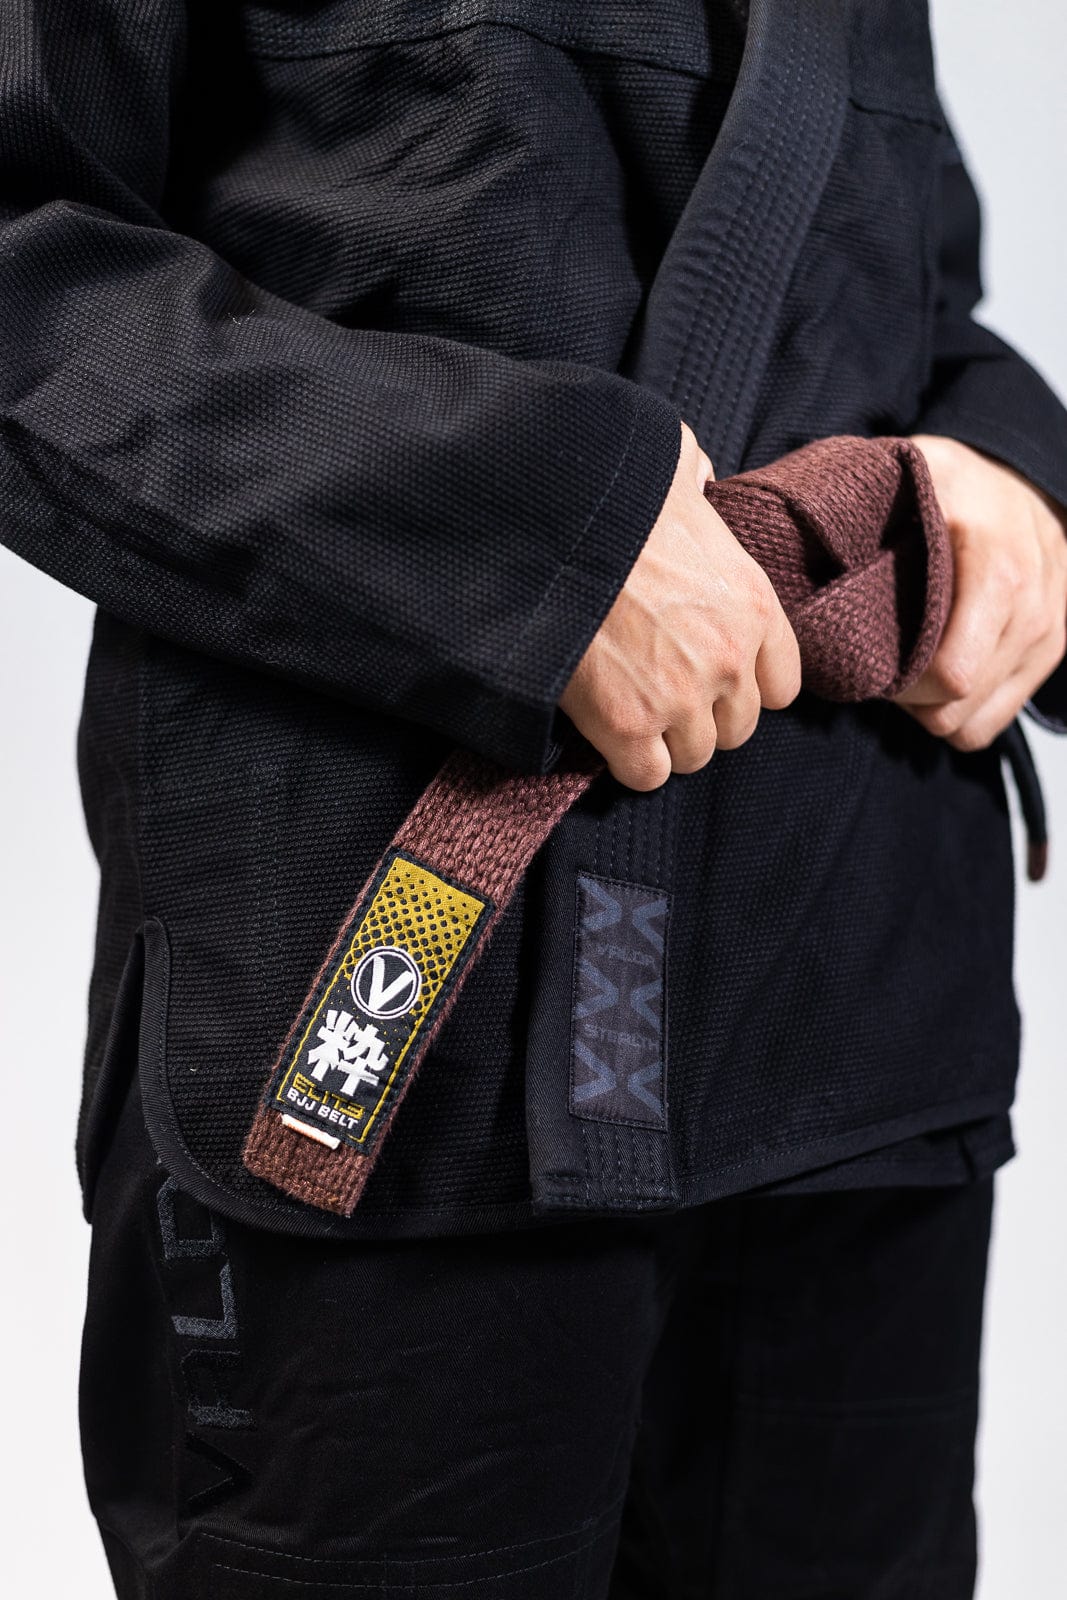 Ladies Premium Stealth BJJ Martial Arts Gi - Black - Valor Fightwear